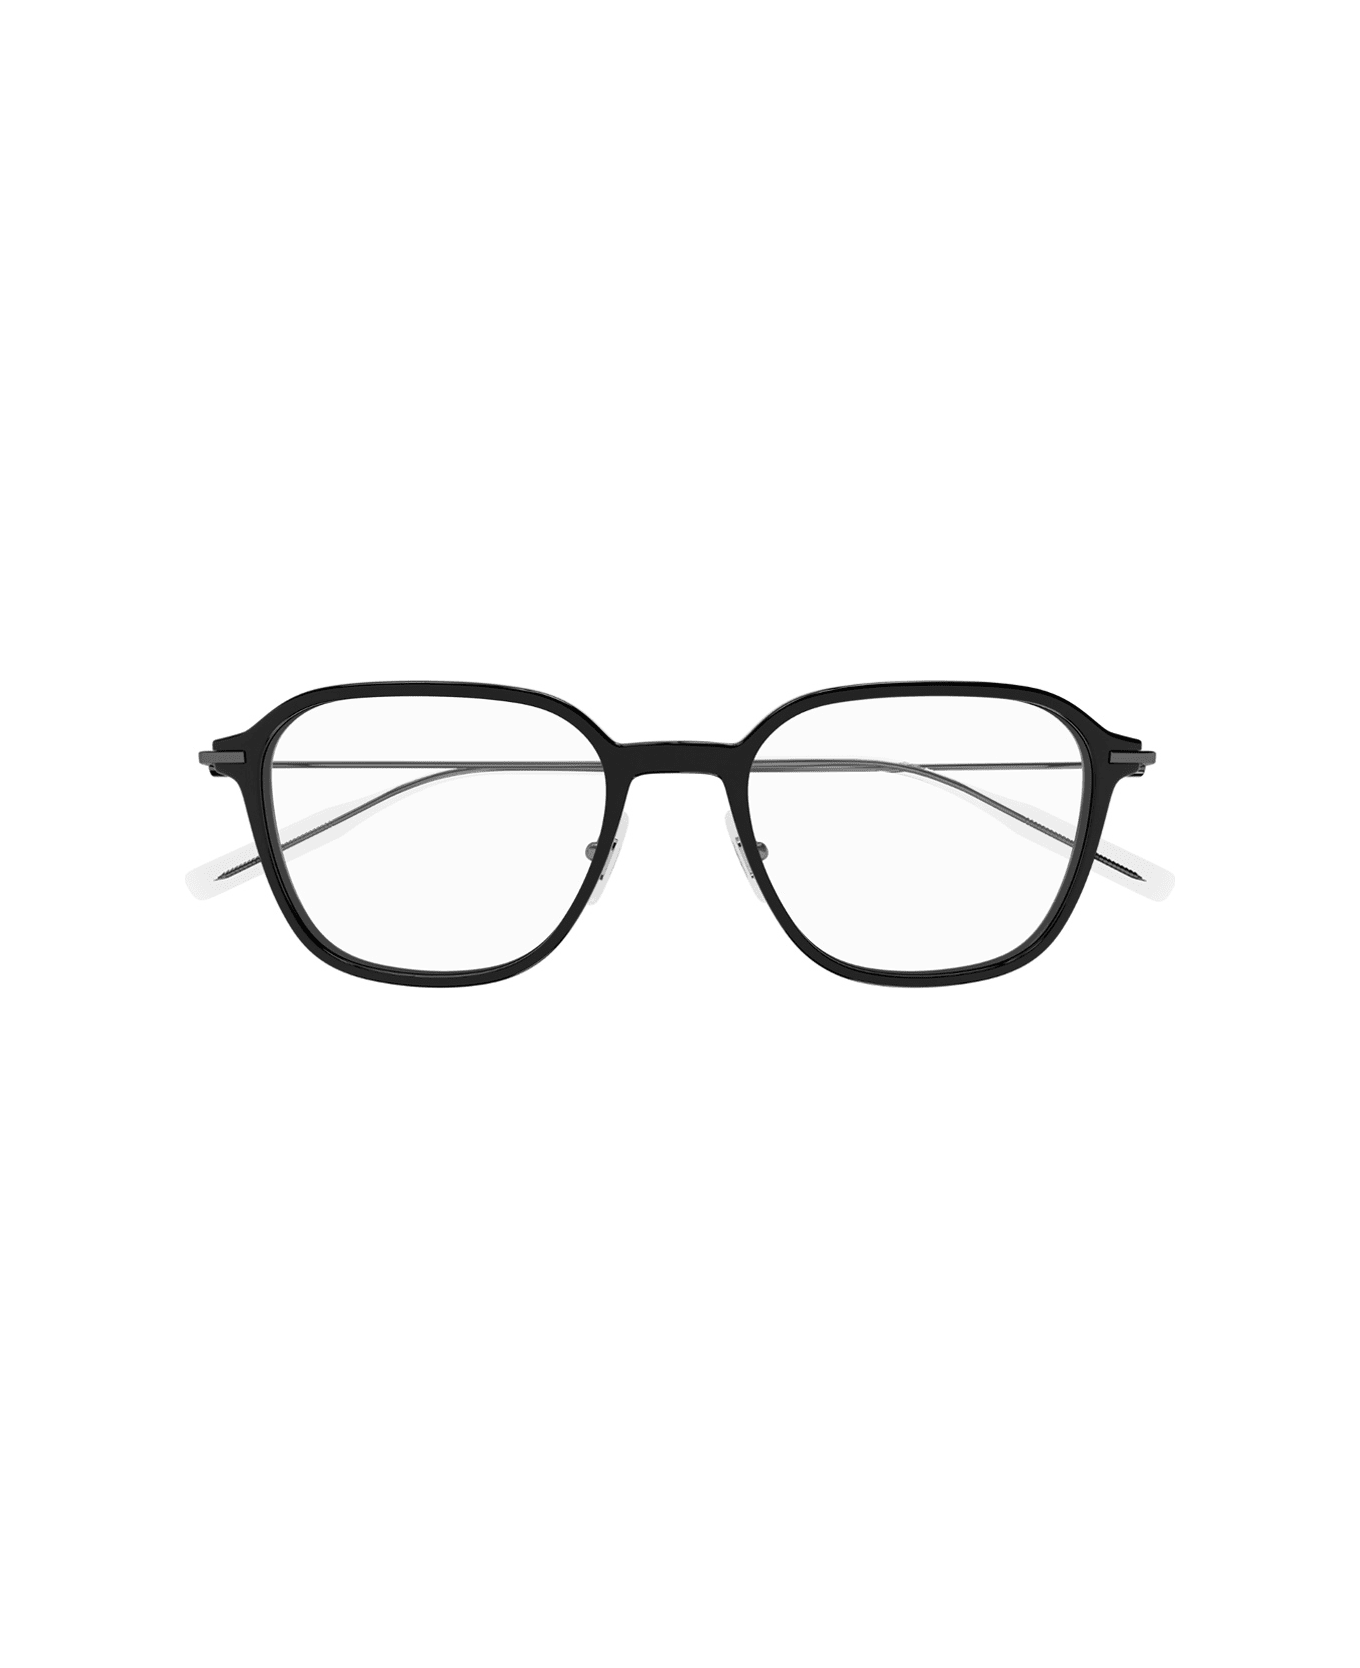 Montblanc Mb0207o Linea Established 001 Glasses - Nero